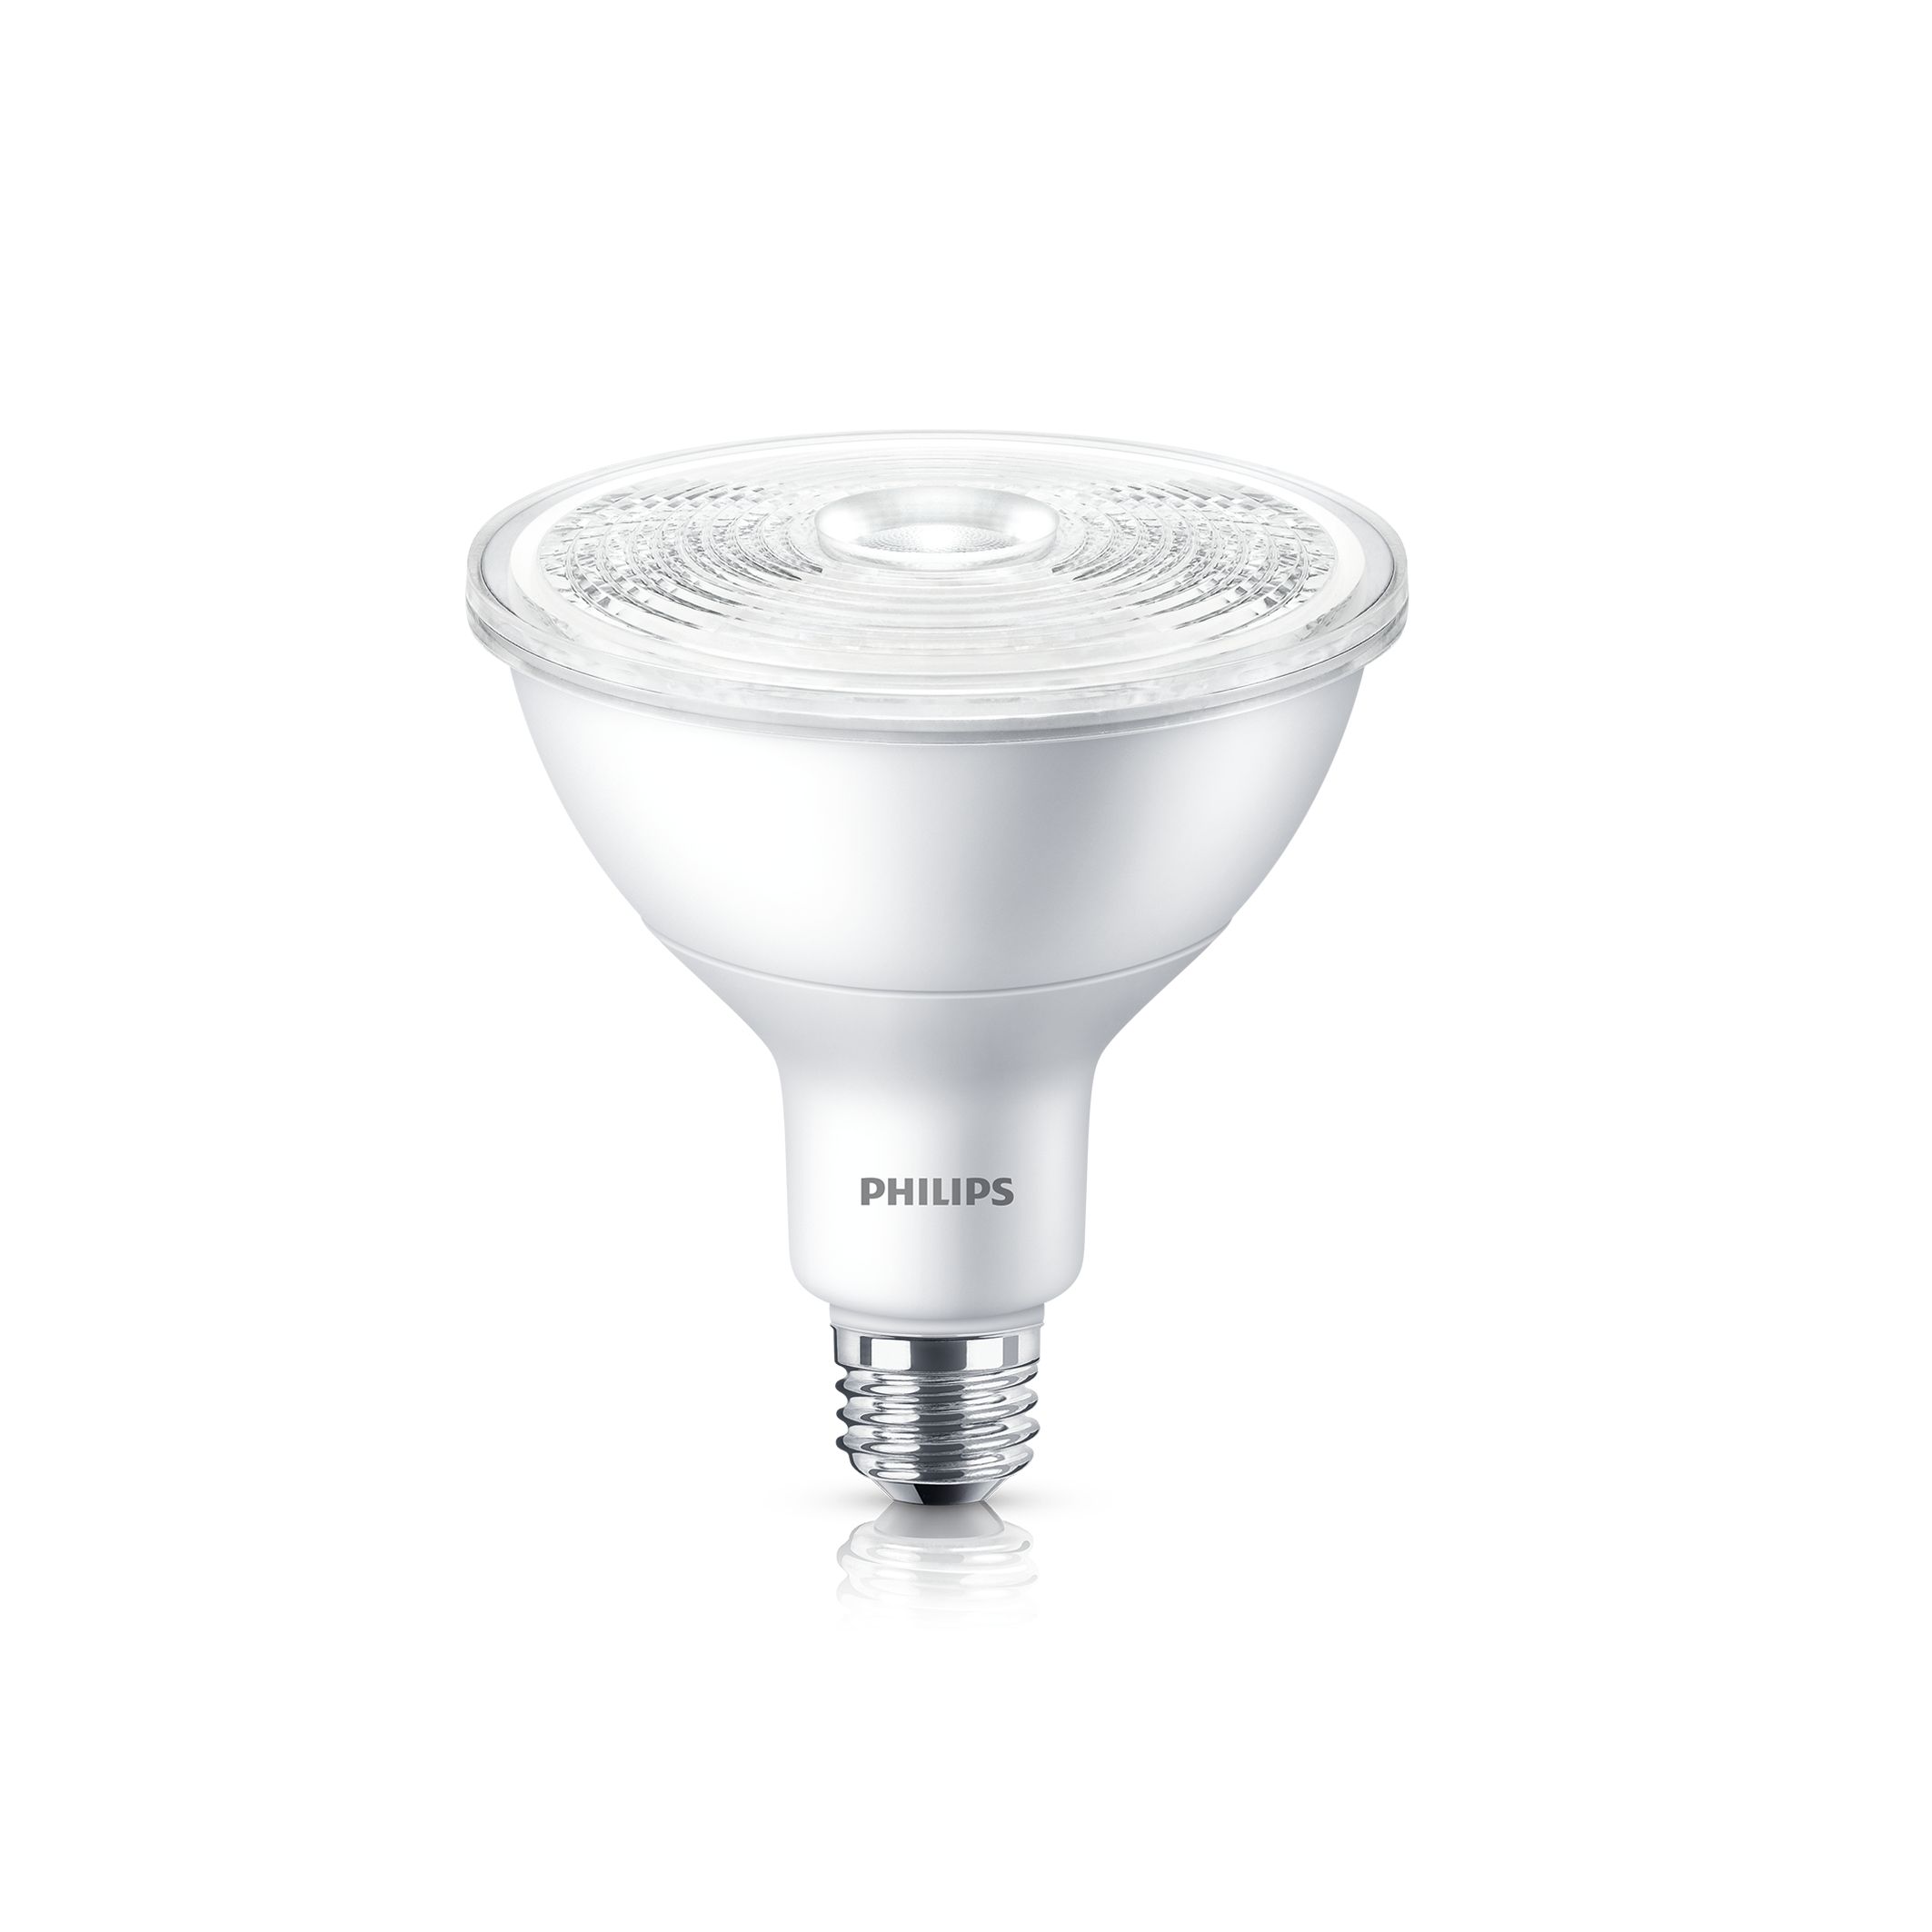 boerderij Verzorgen detectie LED light spots and light bulbs | Philips lighting